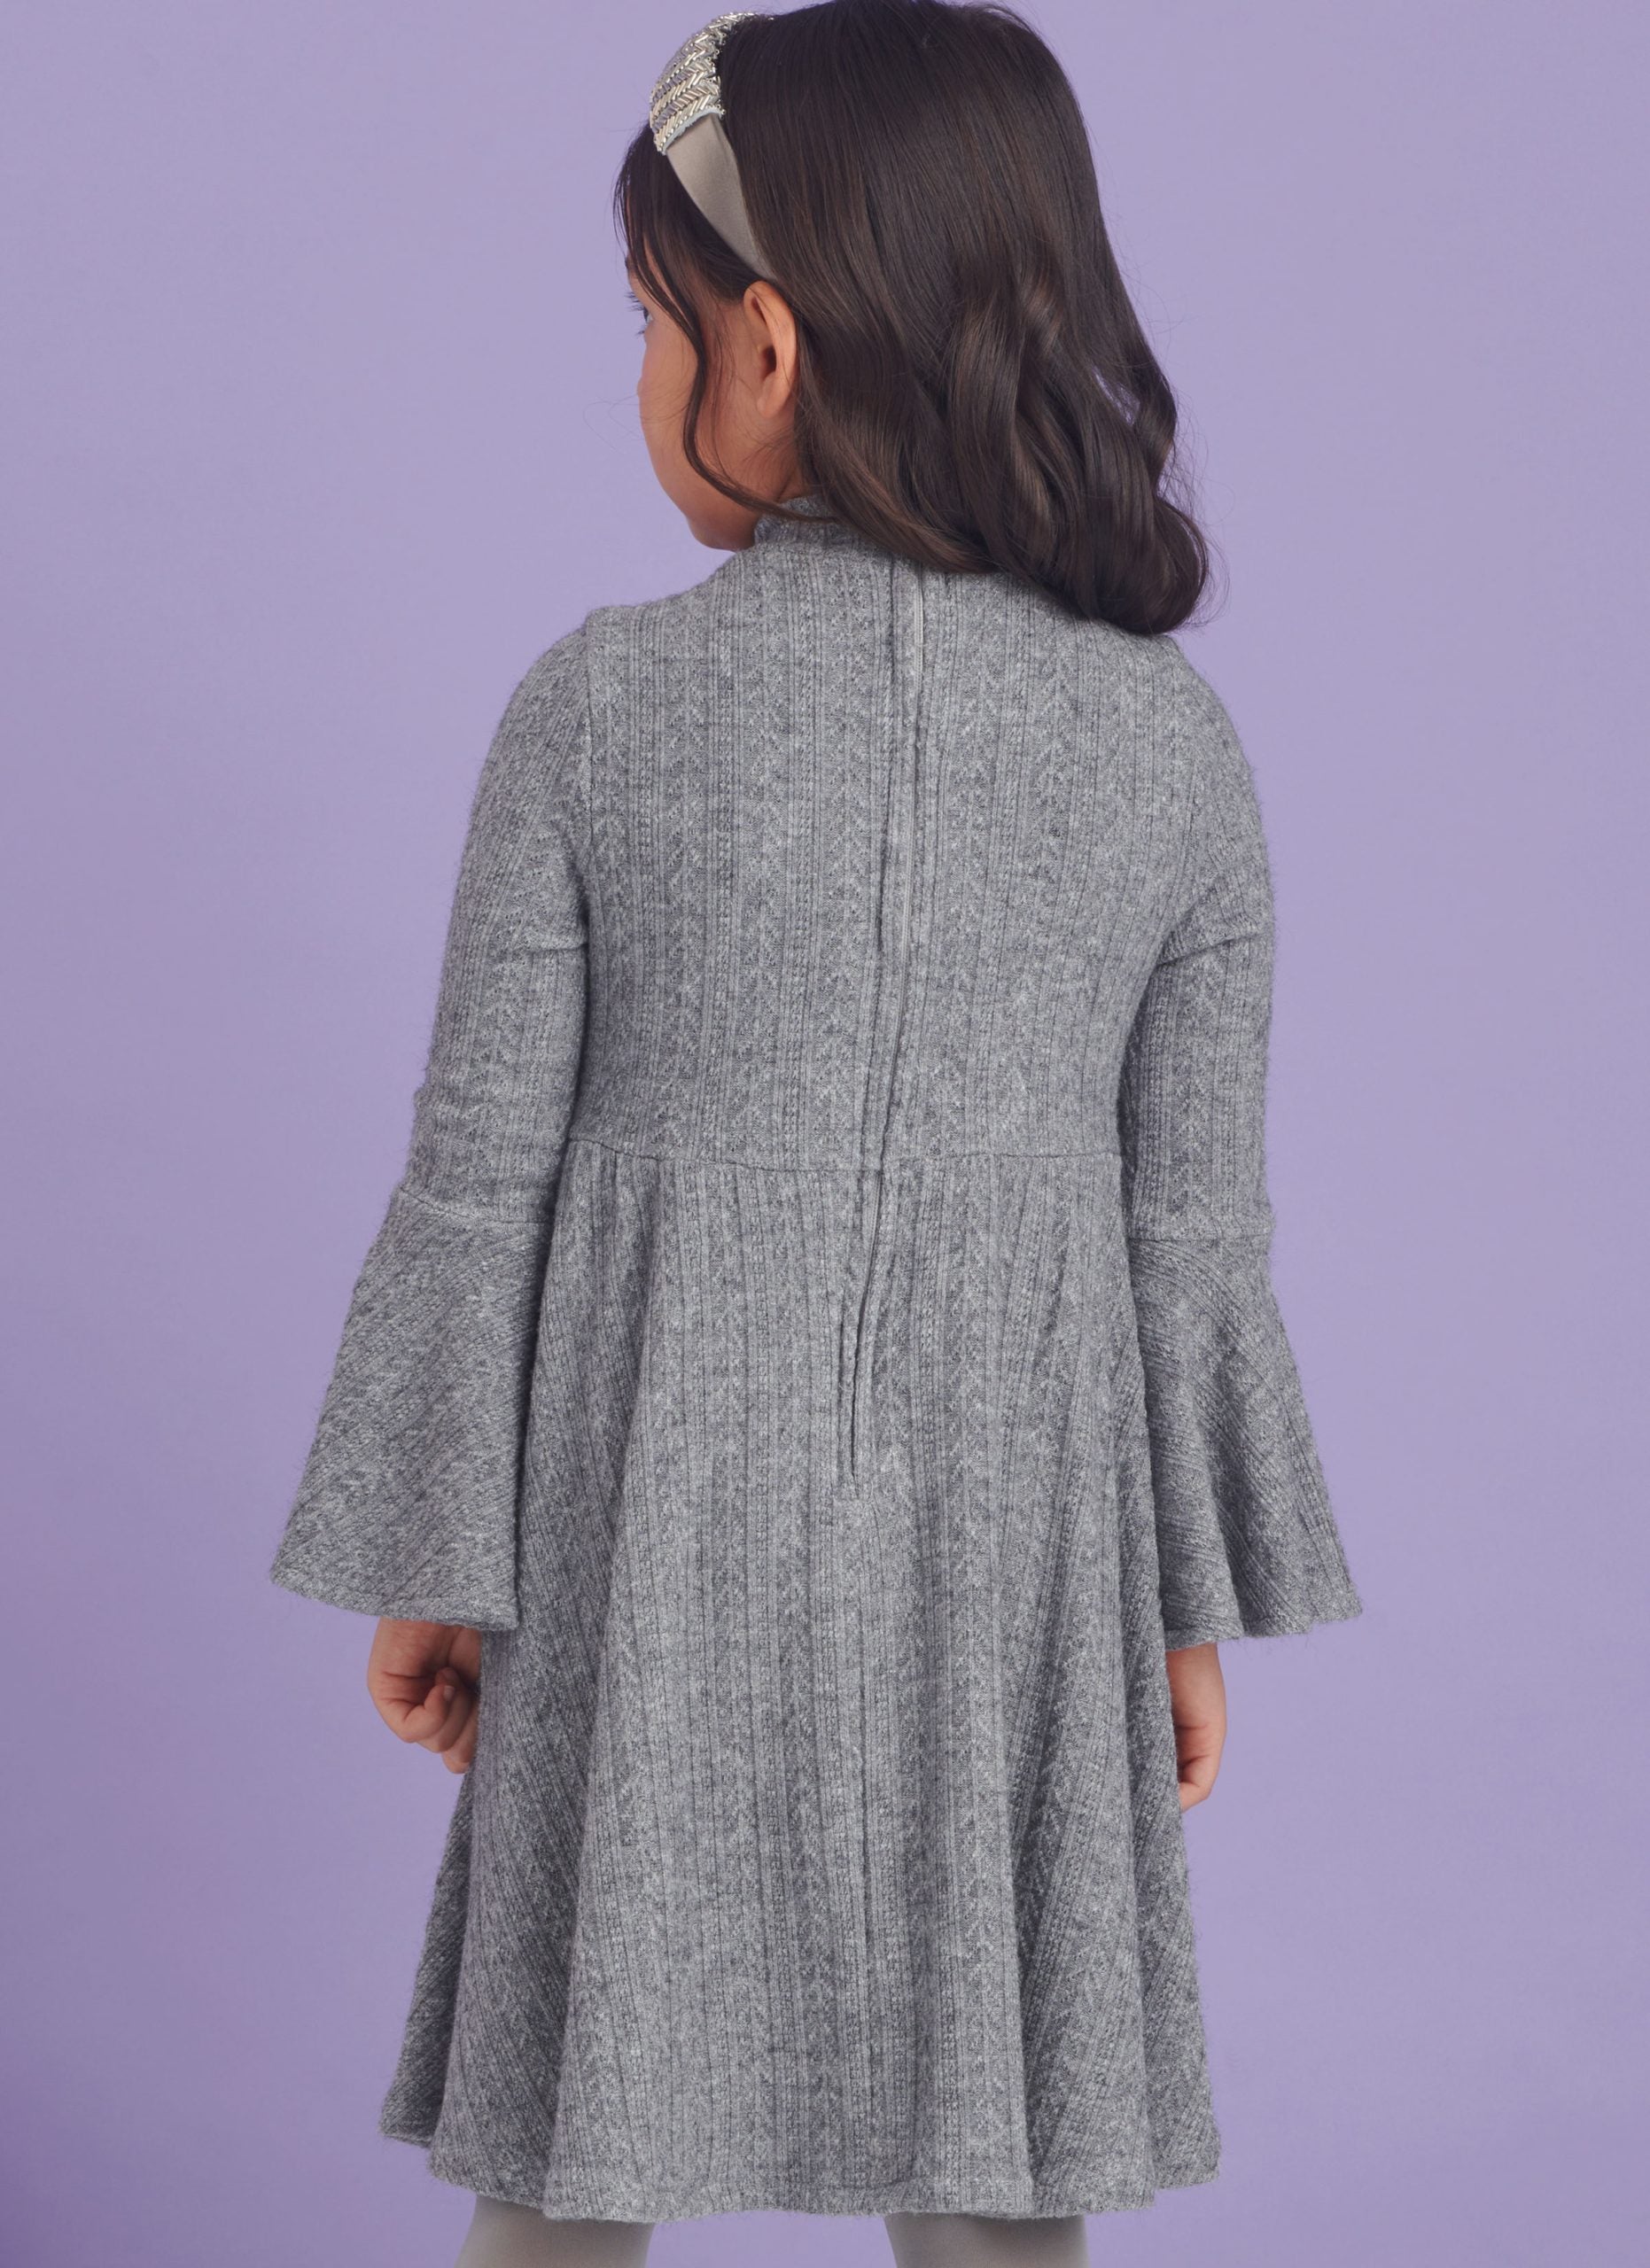 Simplicity Child/Teen Knit Dresses S9862